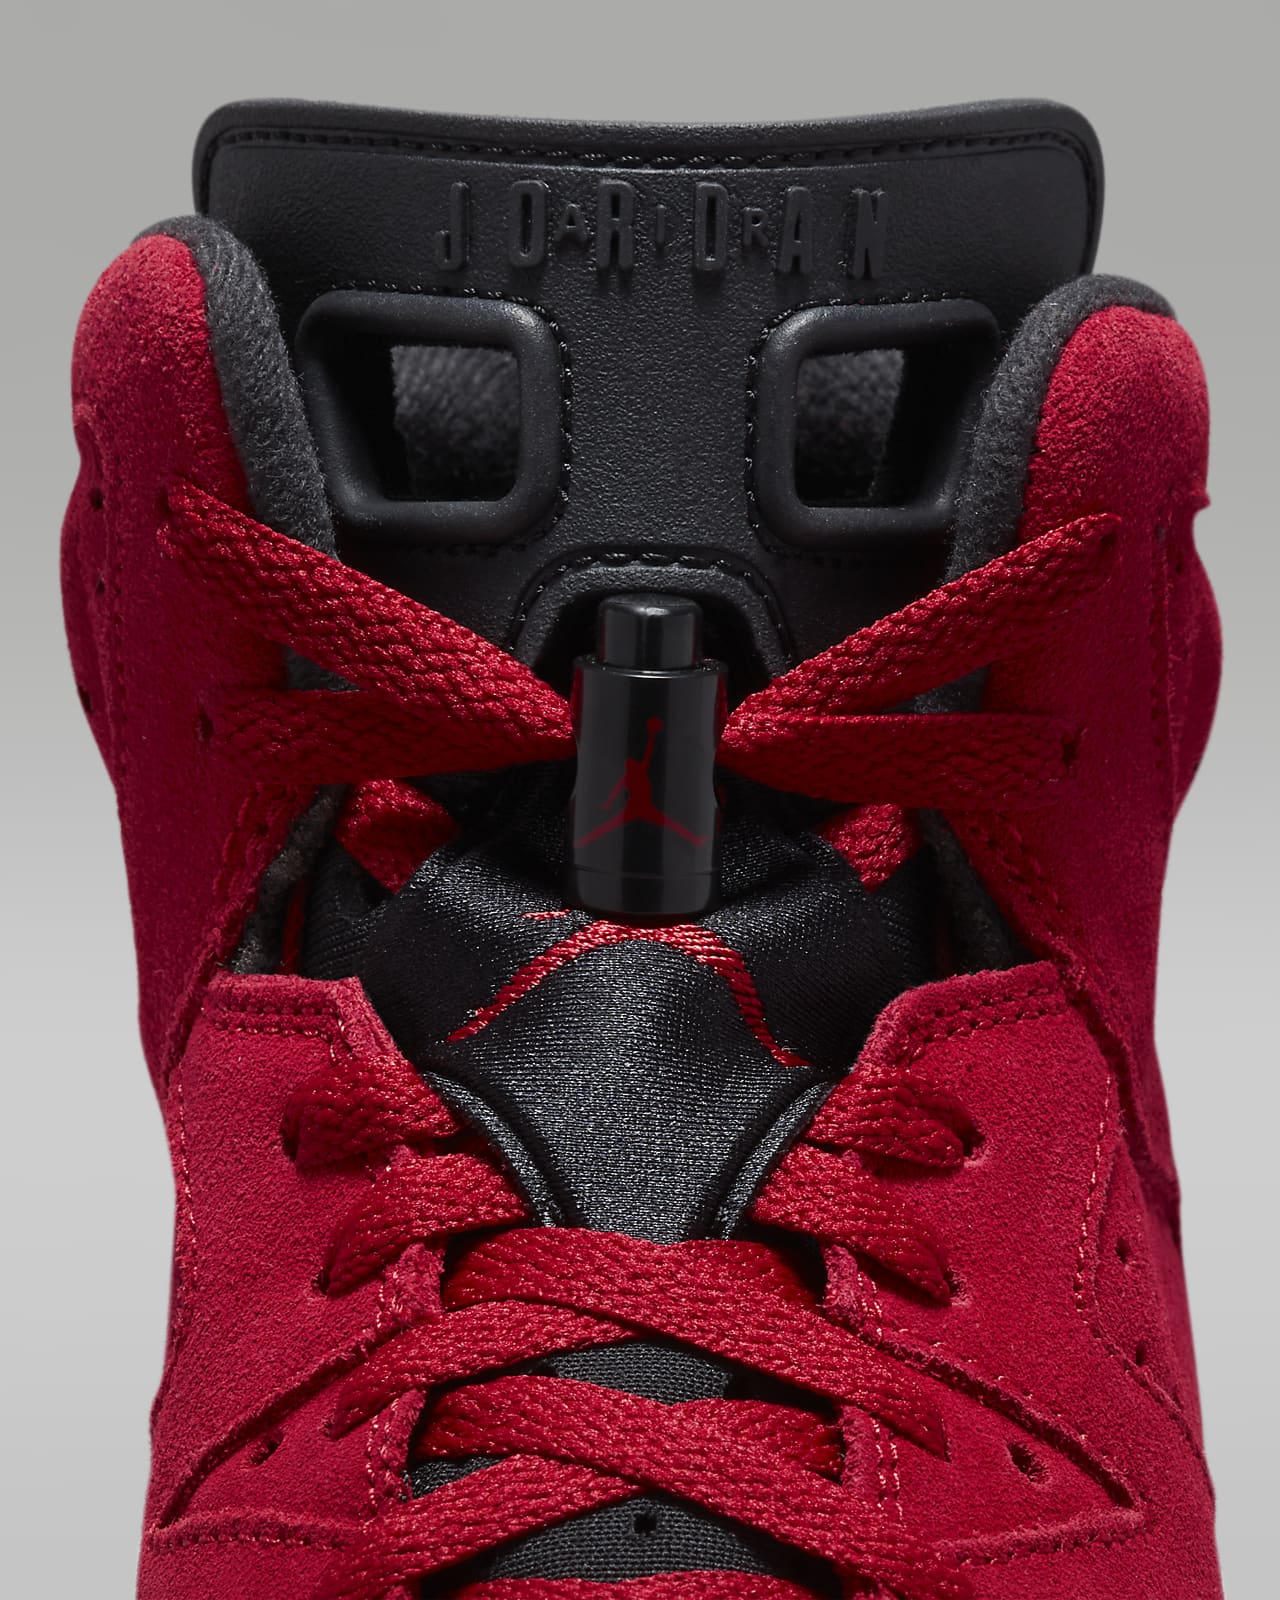 Air Jordan Retro 6 Basketball Shoes